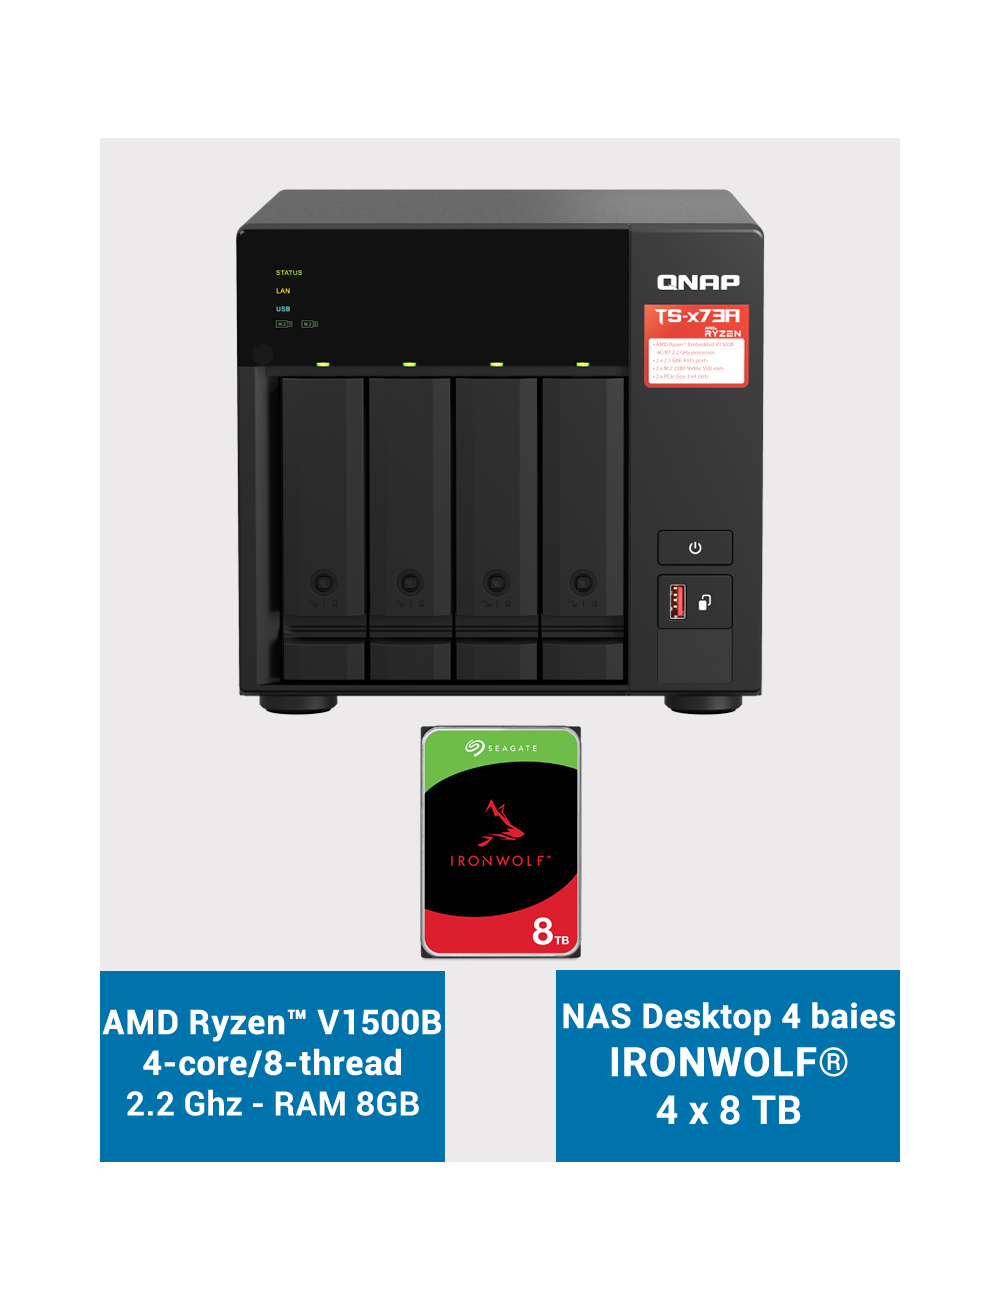 Qnap TS-473A 8GB NAS Server 4 bays IRONWOLF 32TB (4x8TB)